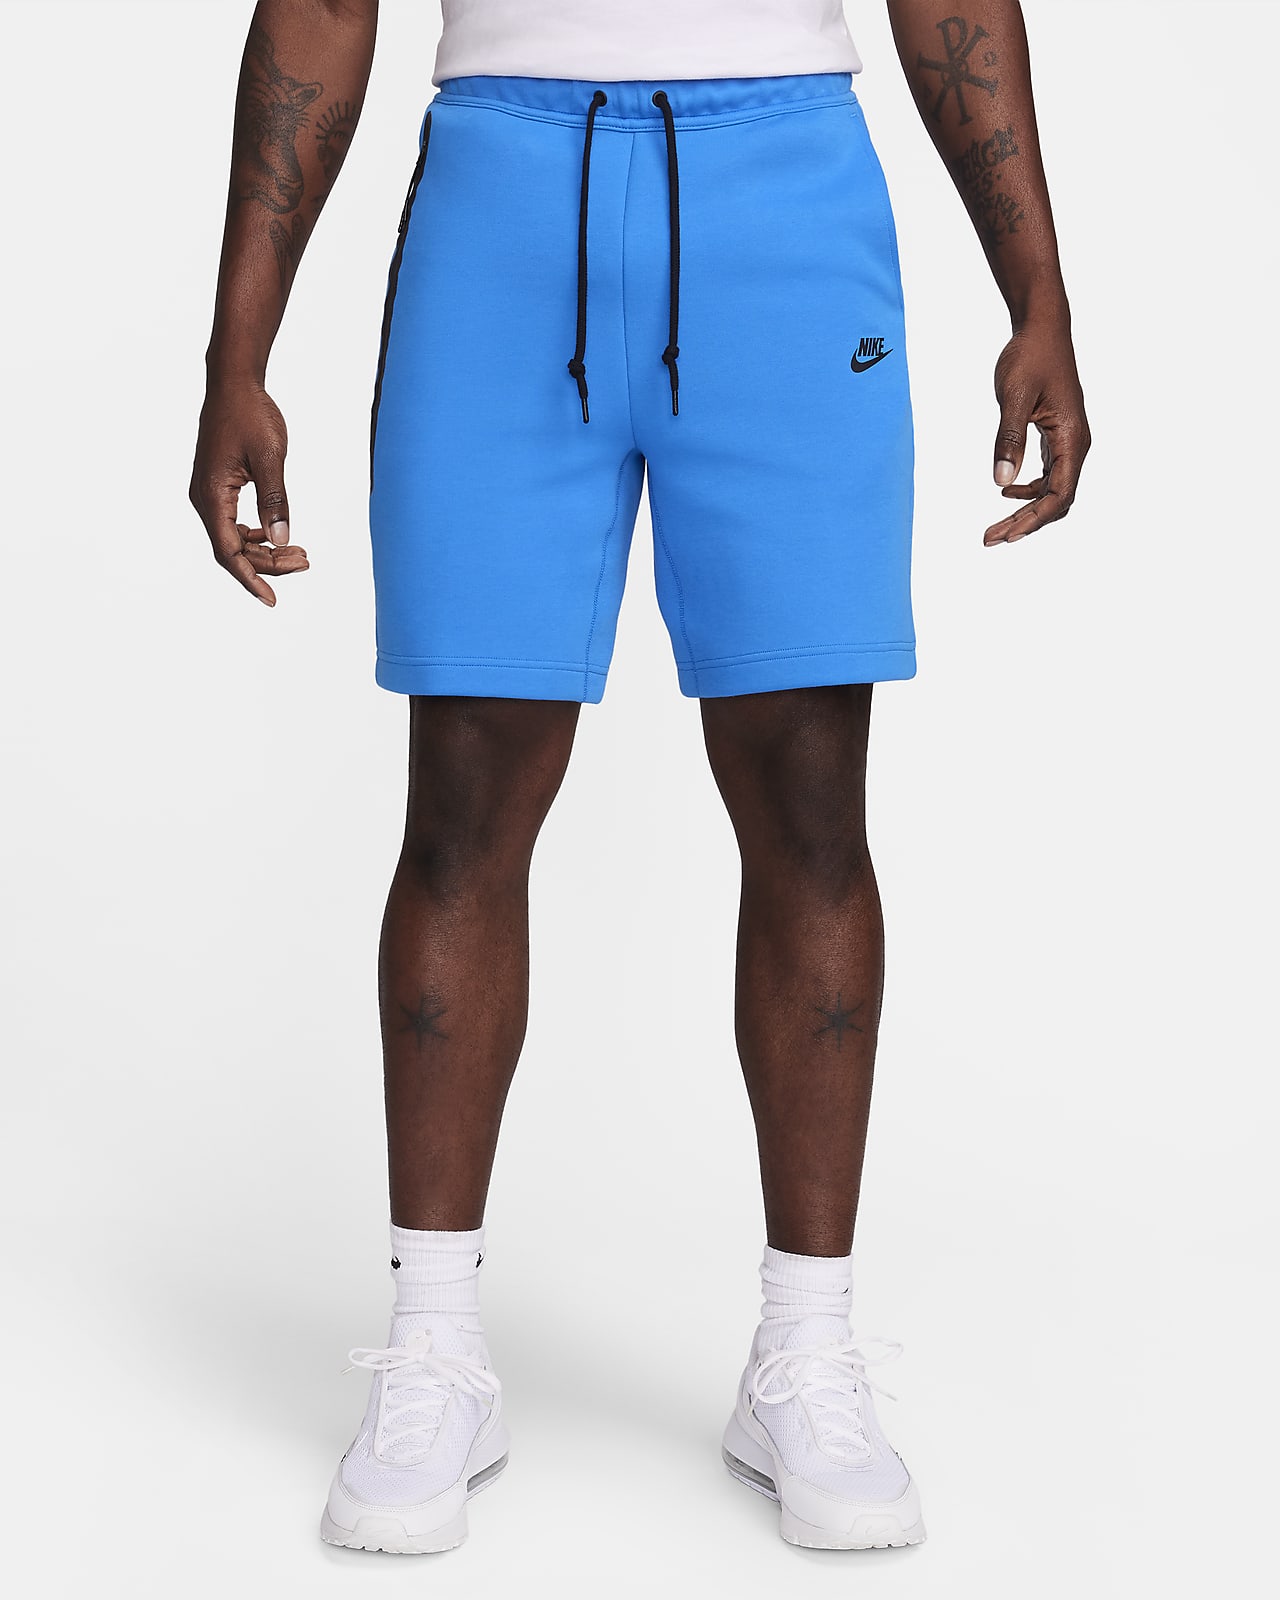 Shorts para hombre Nike Sportswear Tech Fleece